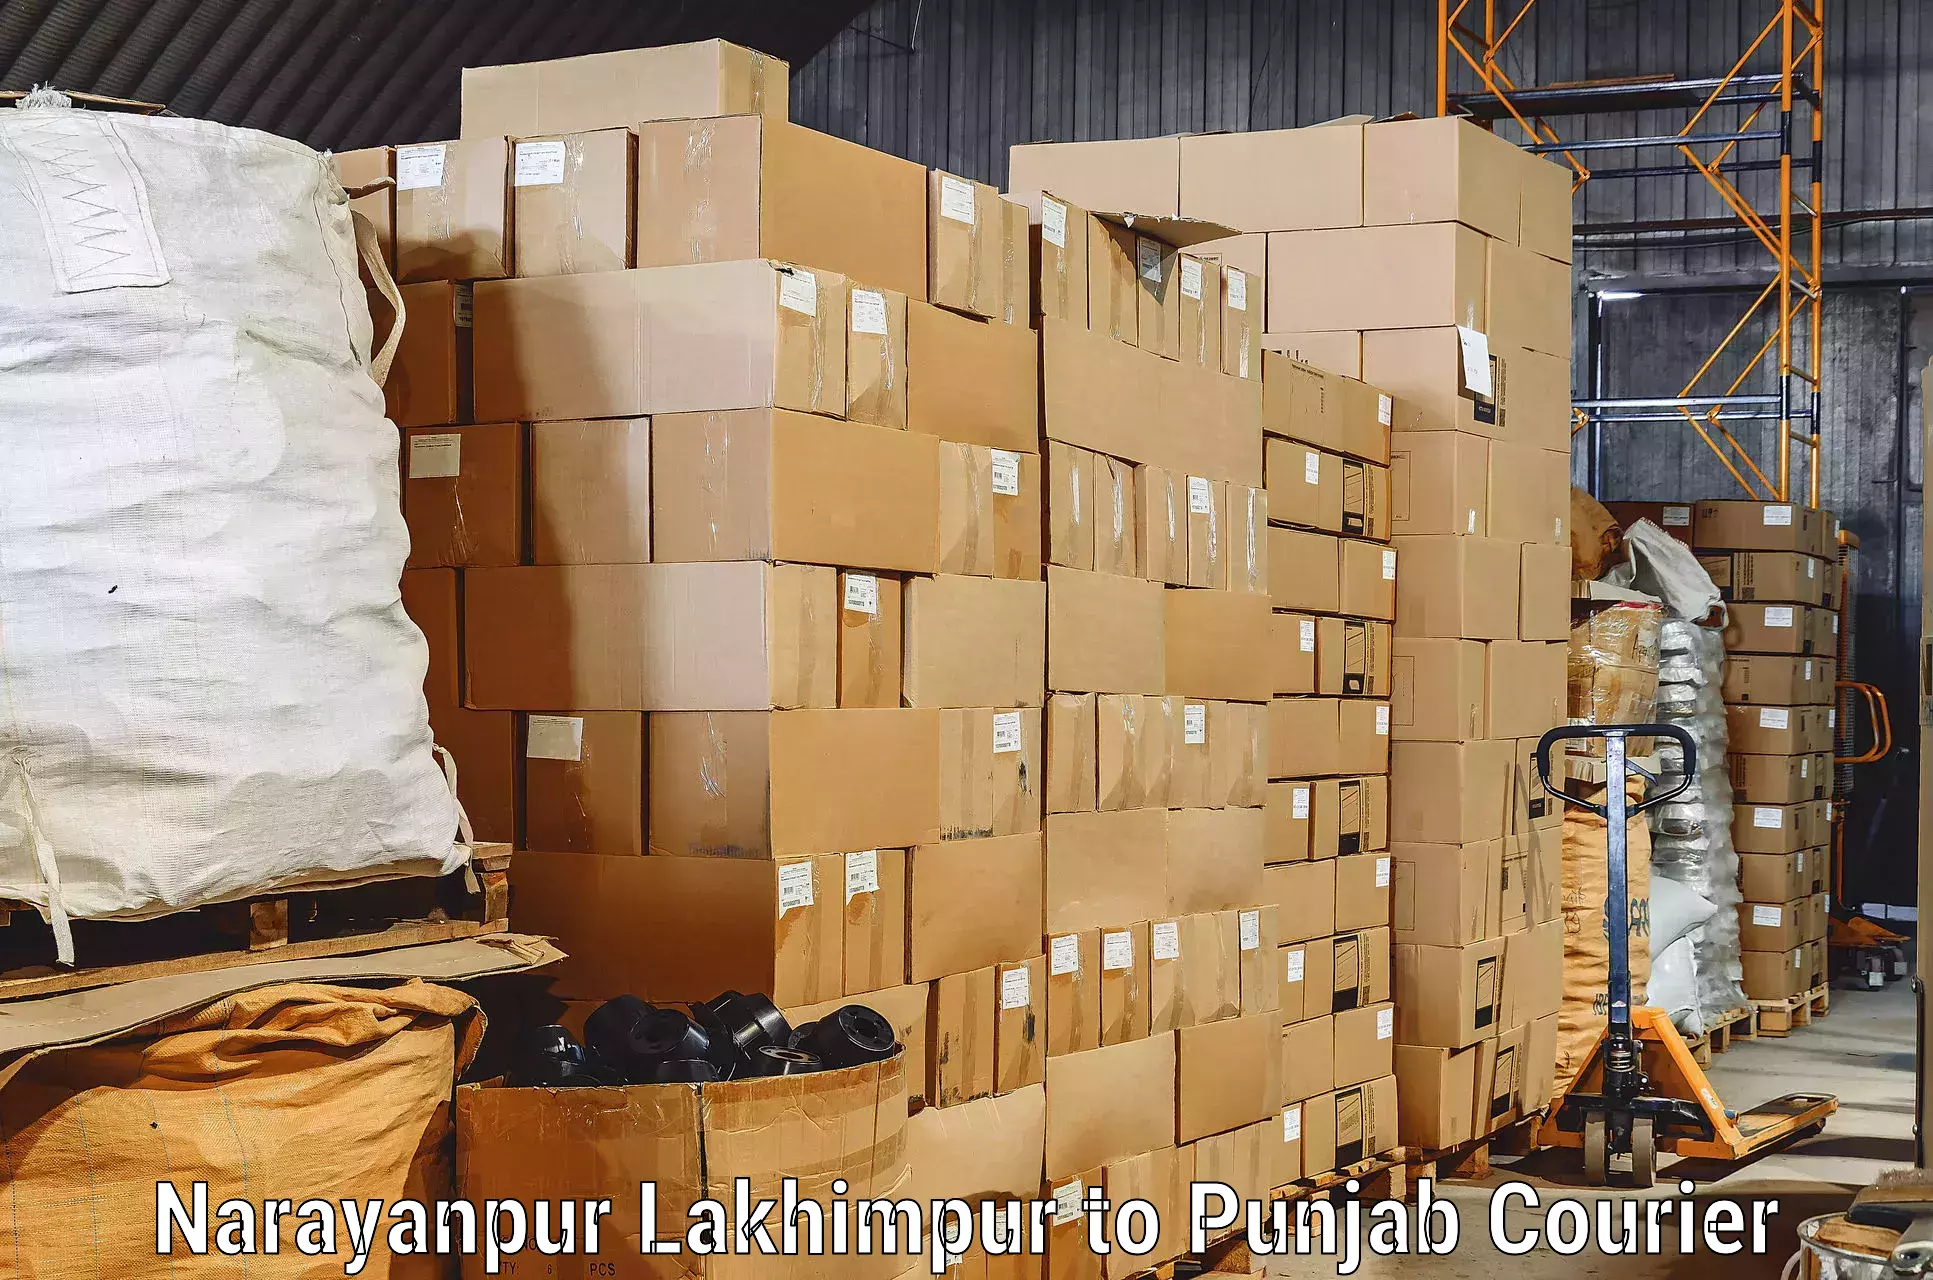 Professional home movers Narayanpur Lakhimpur to Nawanshahr